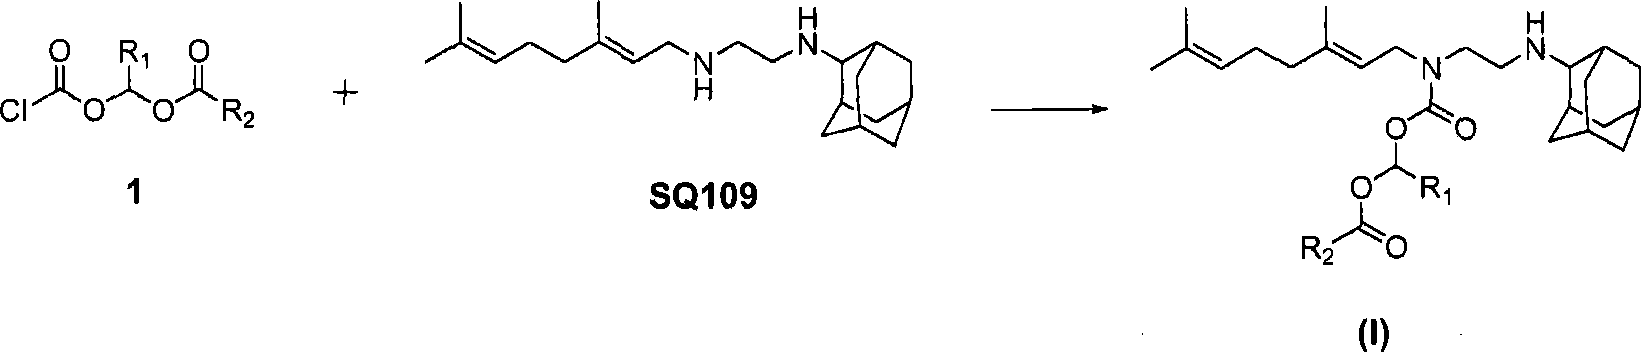 Novel ethylene diamine derivative